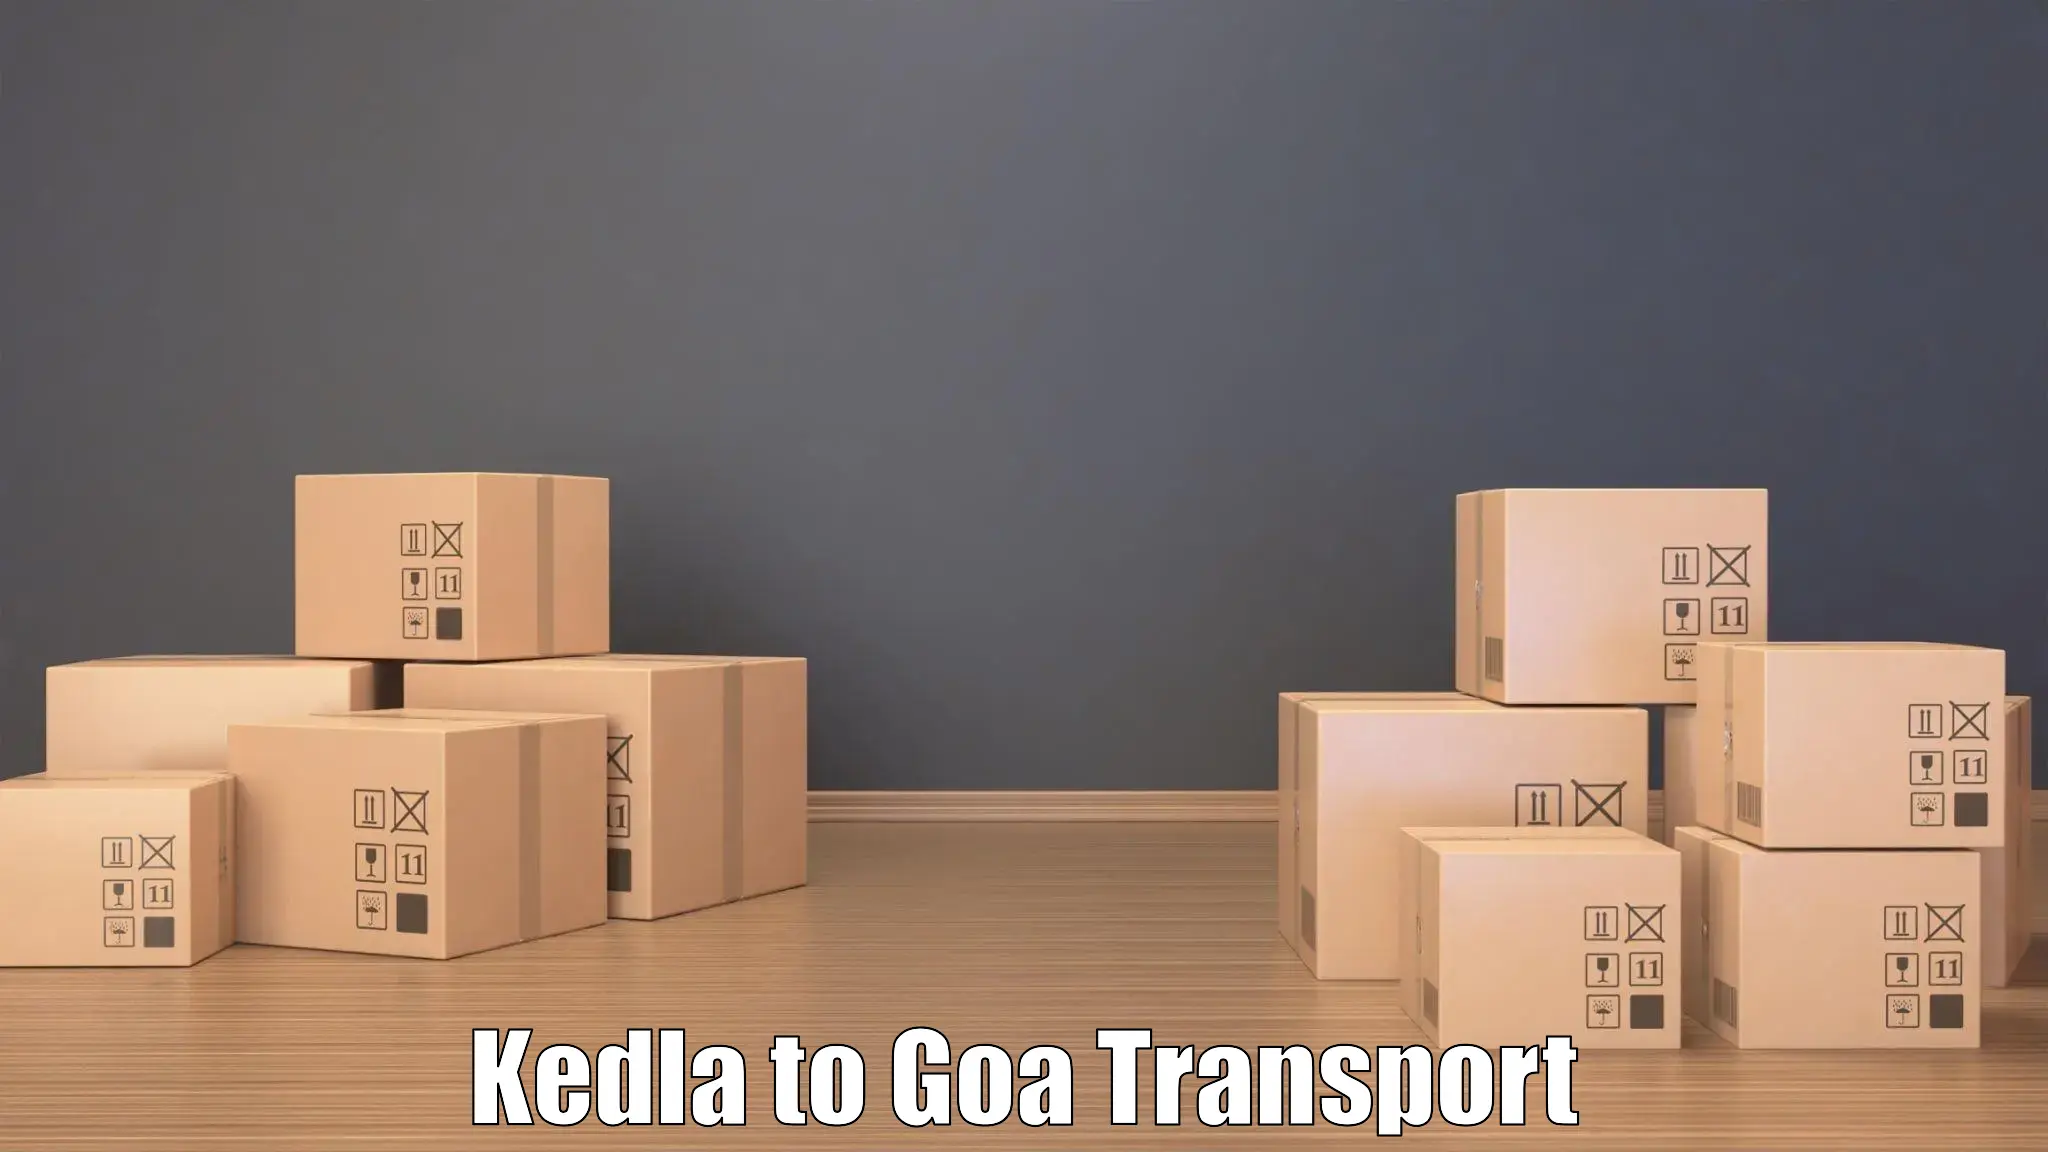 Road transport online services Kedla to Bardez